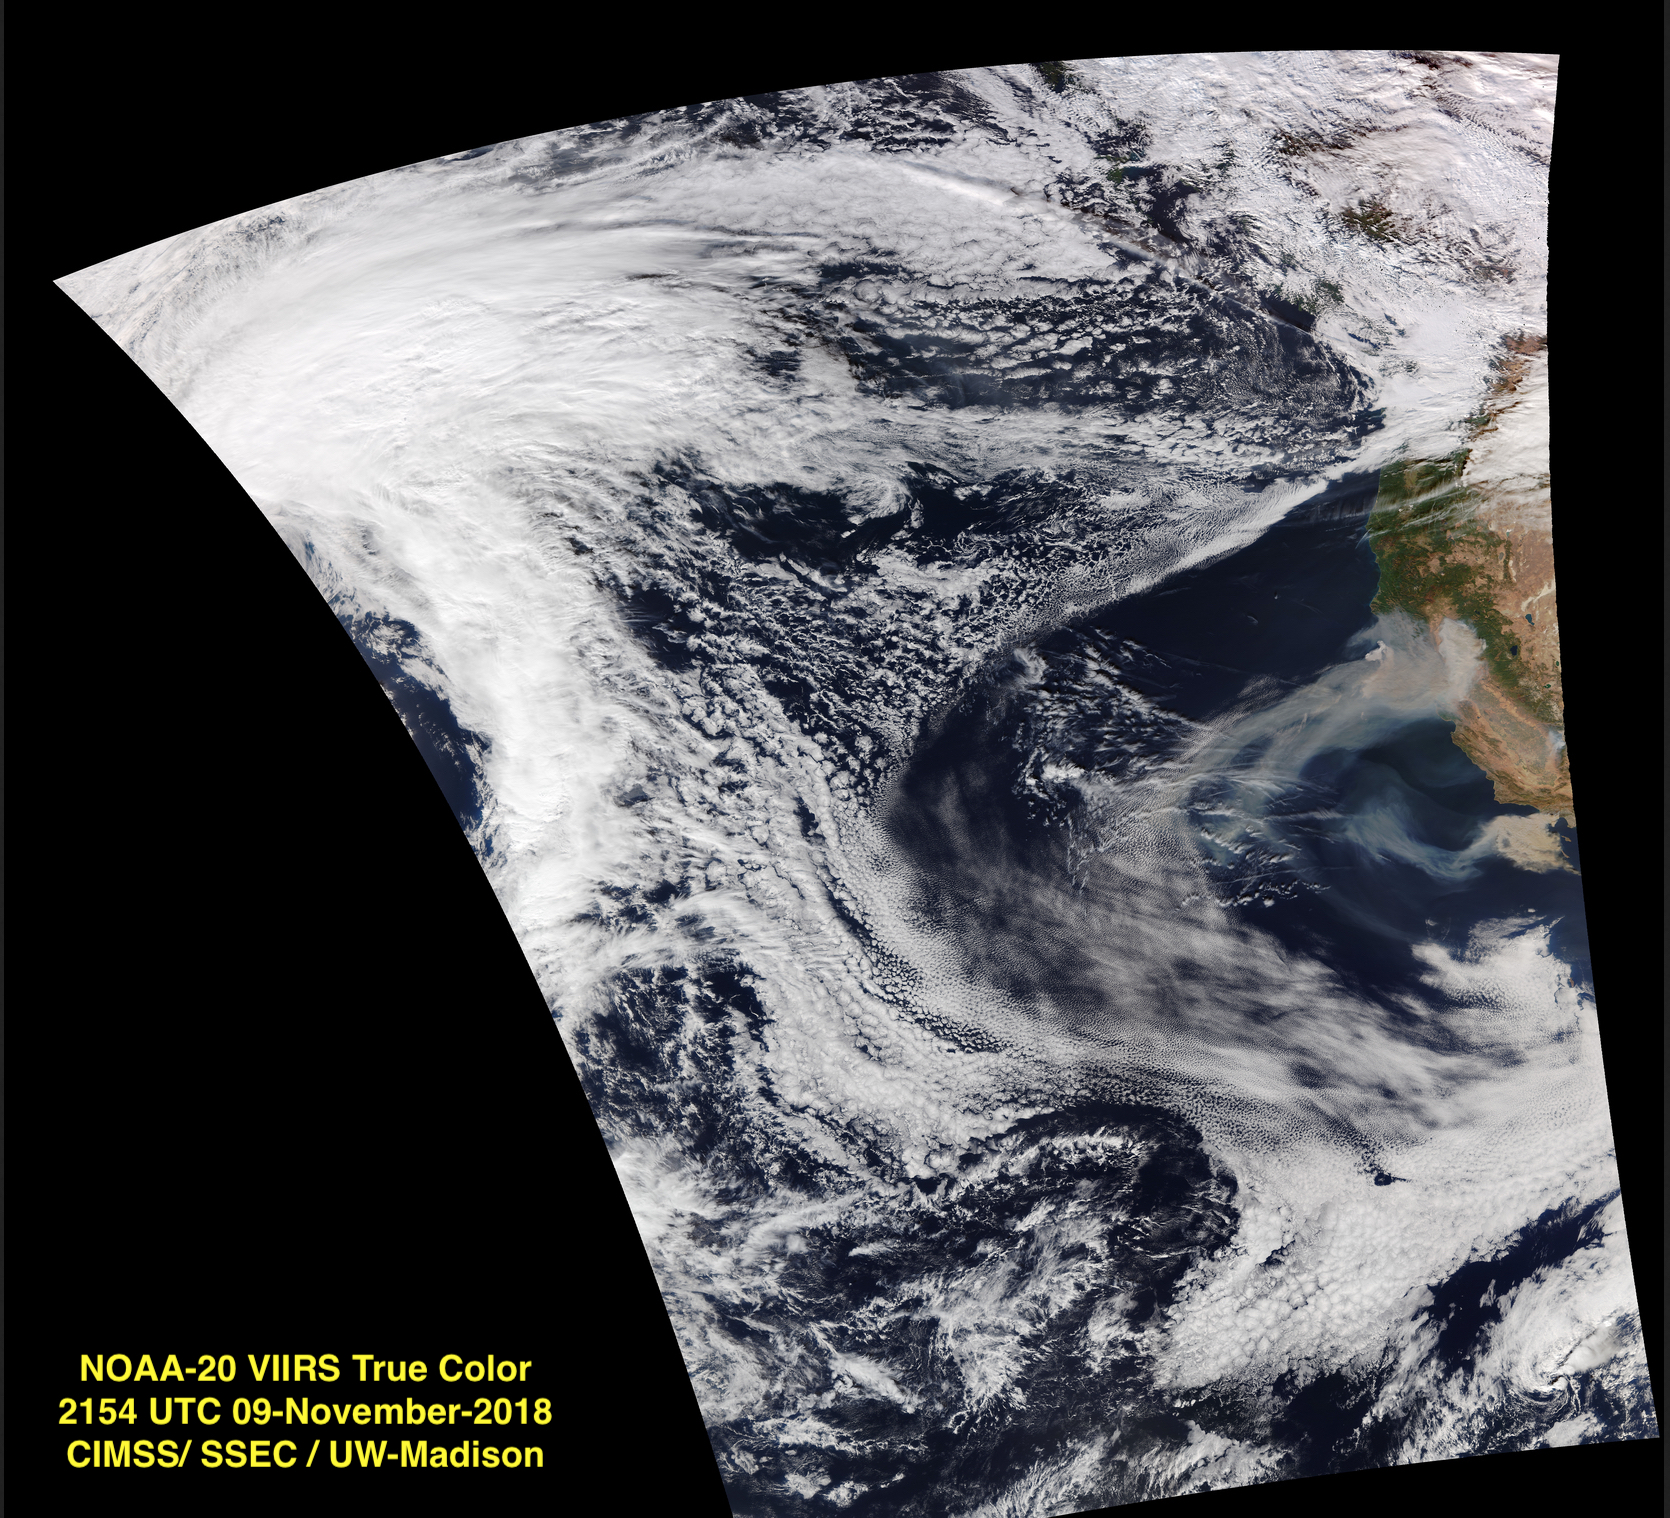 NOAA-20 VIIRS True Color RGB image at 2154 UTC [click to enlarge]